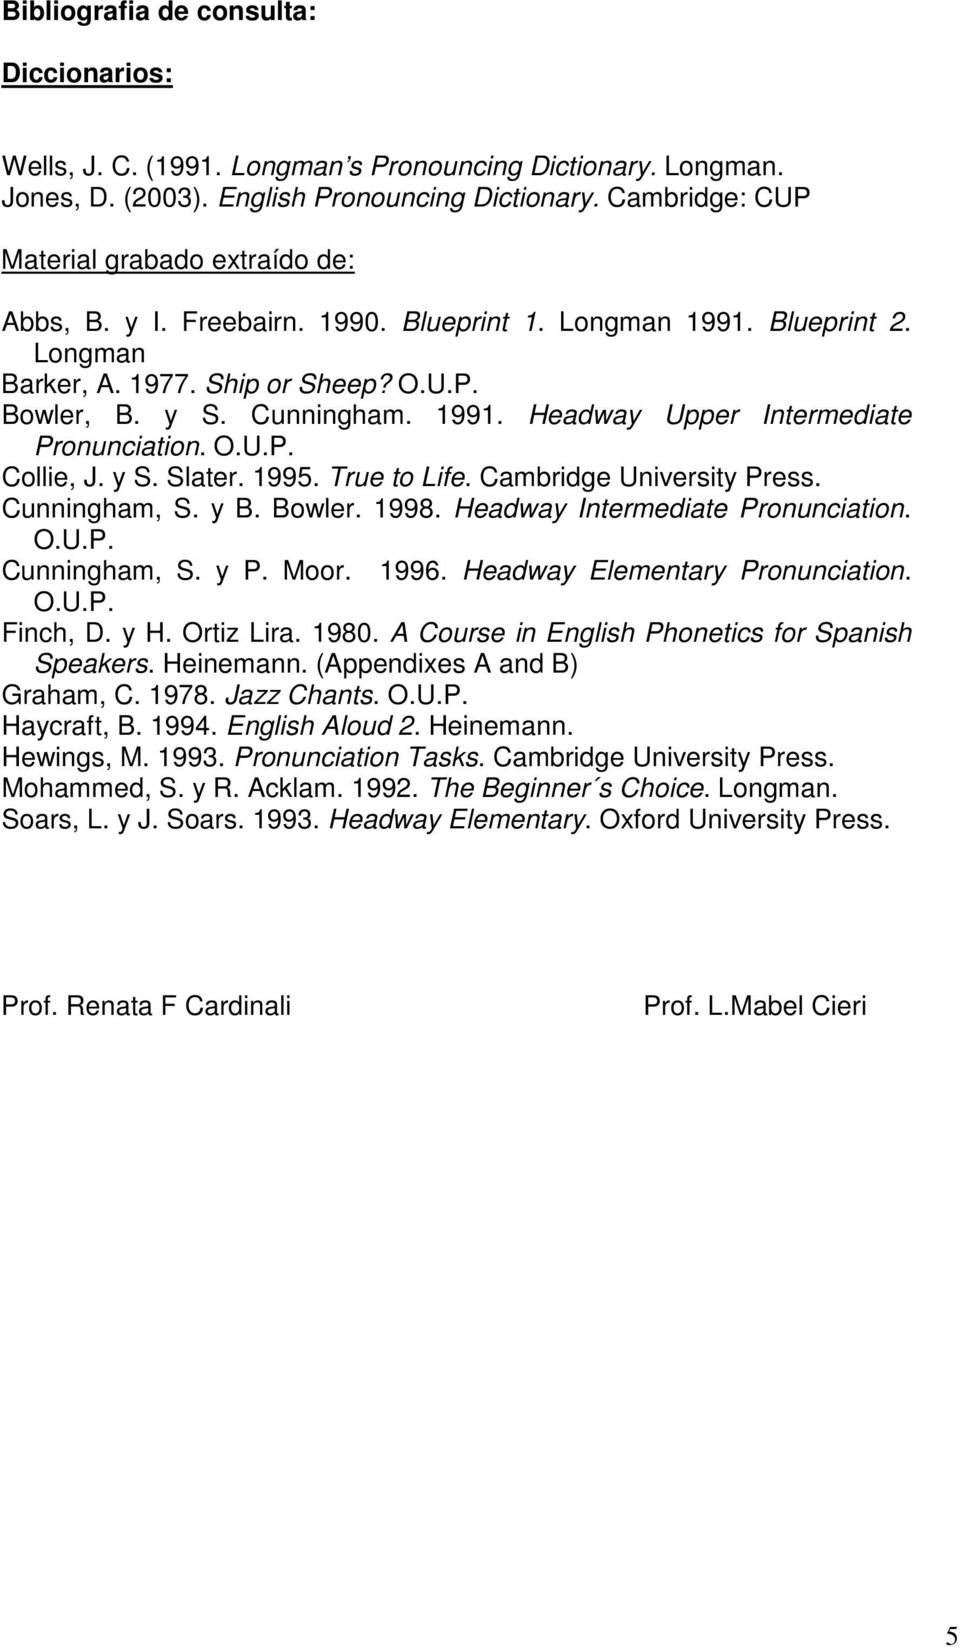 O.U.P. Collie, J. y S. Slater. 1995. True to Life. Cambridge University Press. Cunningham, S. y B. Bowler. 1998. Headway Intermediate Pronunciation. O.U.P. Cunningham, S. y P. Moor. 1996.